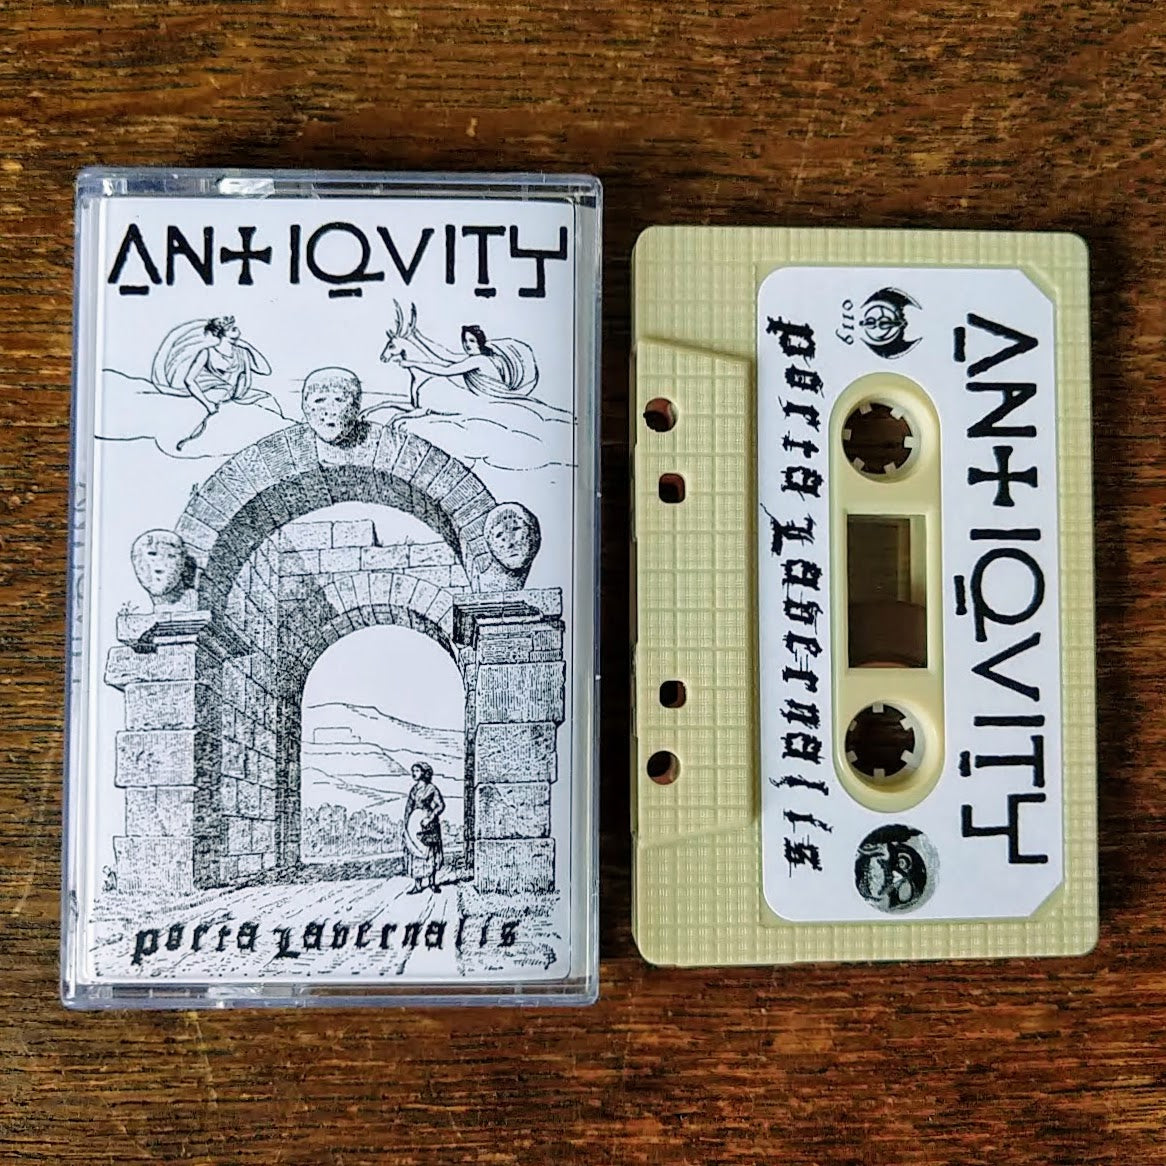 [SOLD OUT] ANTIQVITY "Porta Lavernalis" Cassette Tape (Lim. 100)